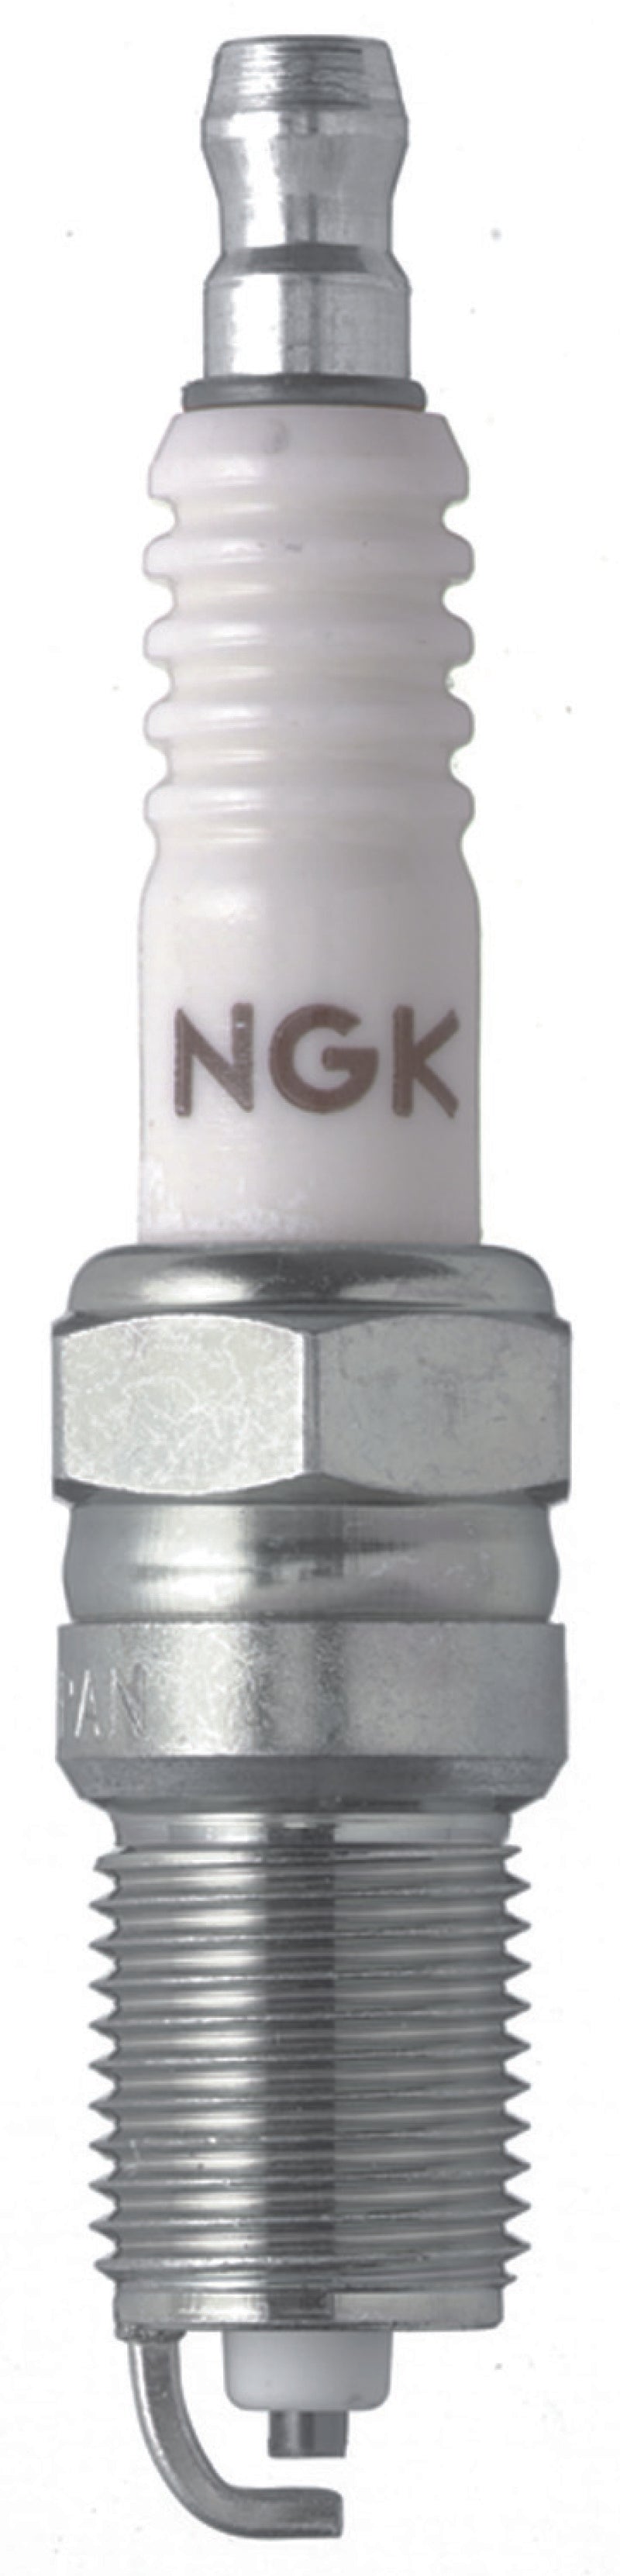 NGK Nickel Spark Plug Box of 4 (R5724-8) -  Shop now at Performance Car Parts